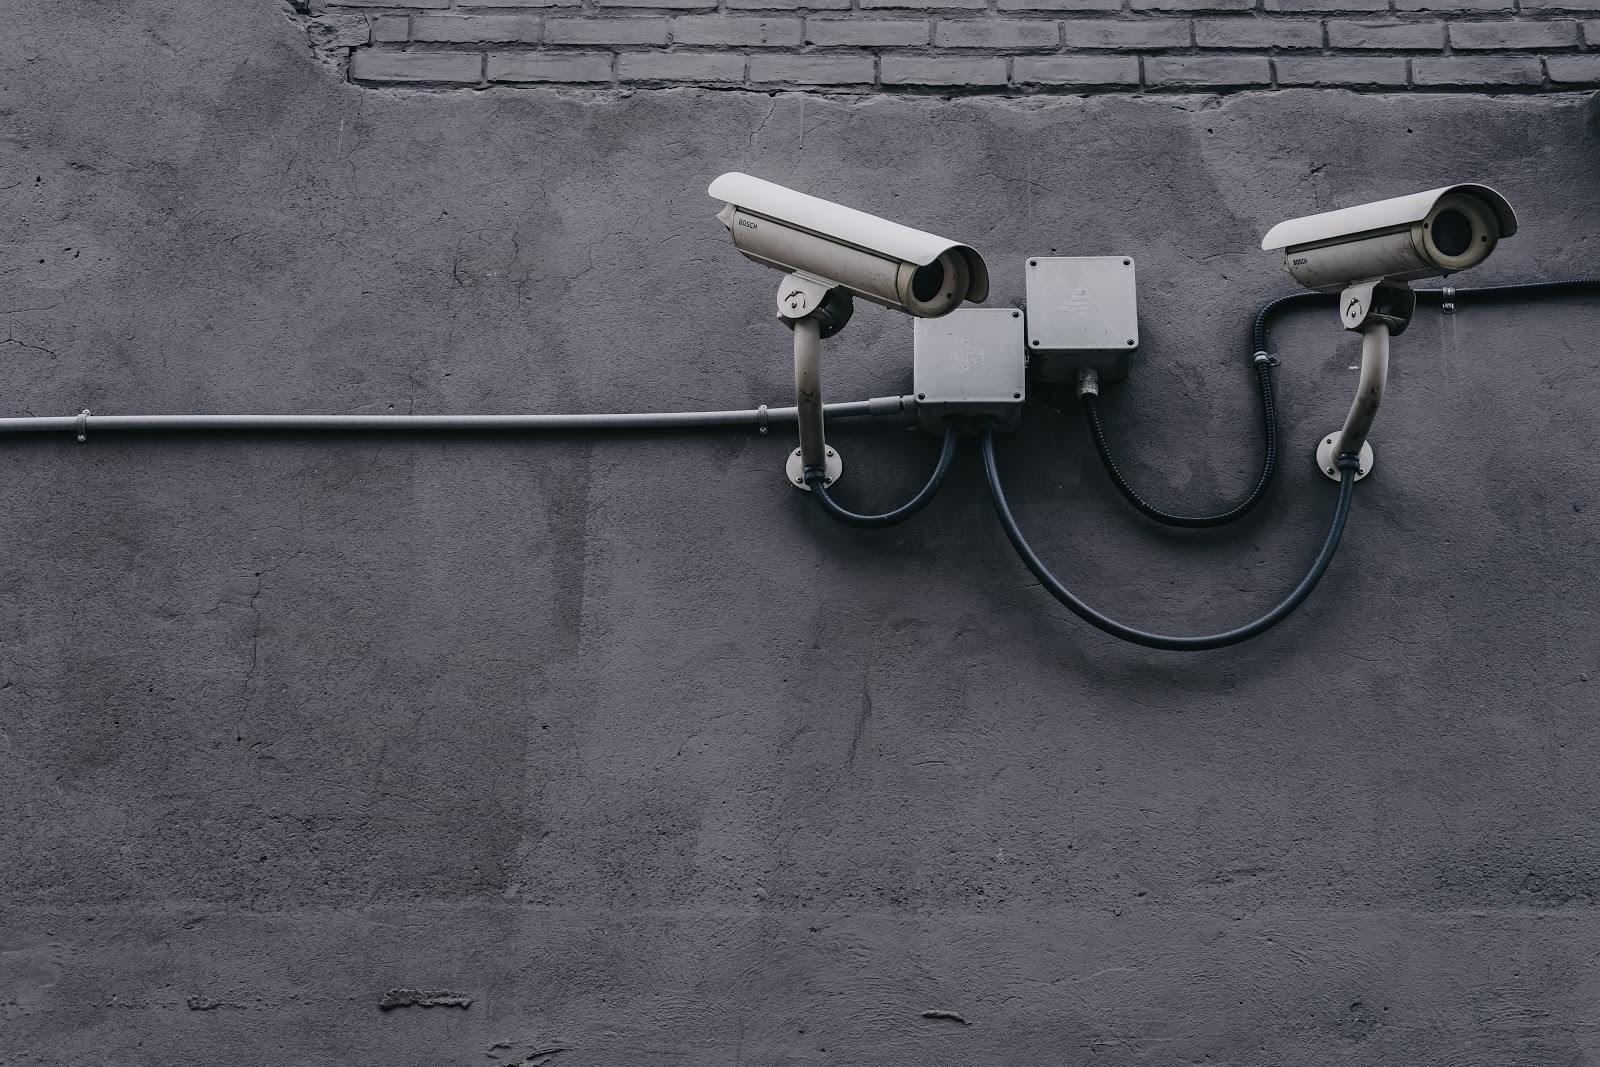 Security cameras spying